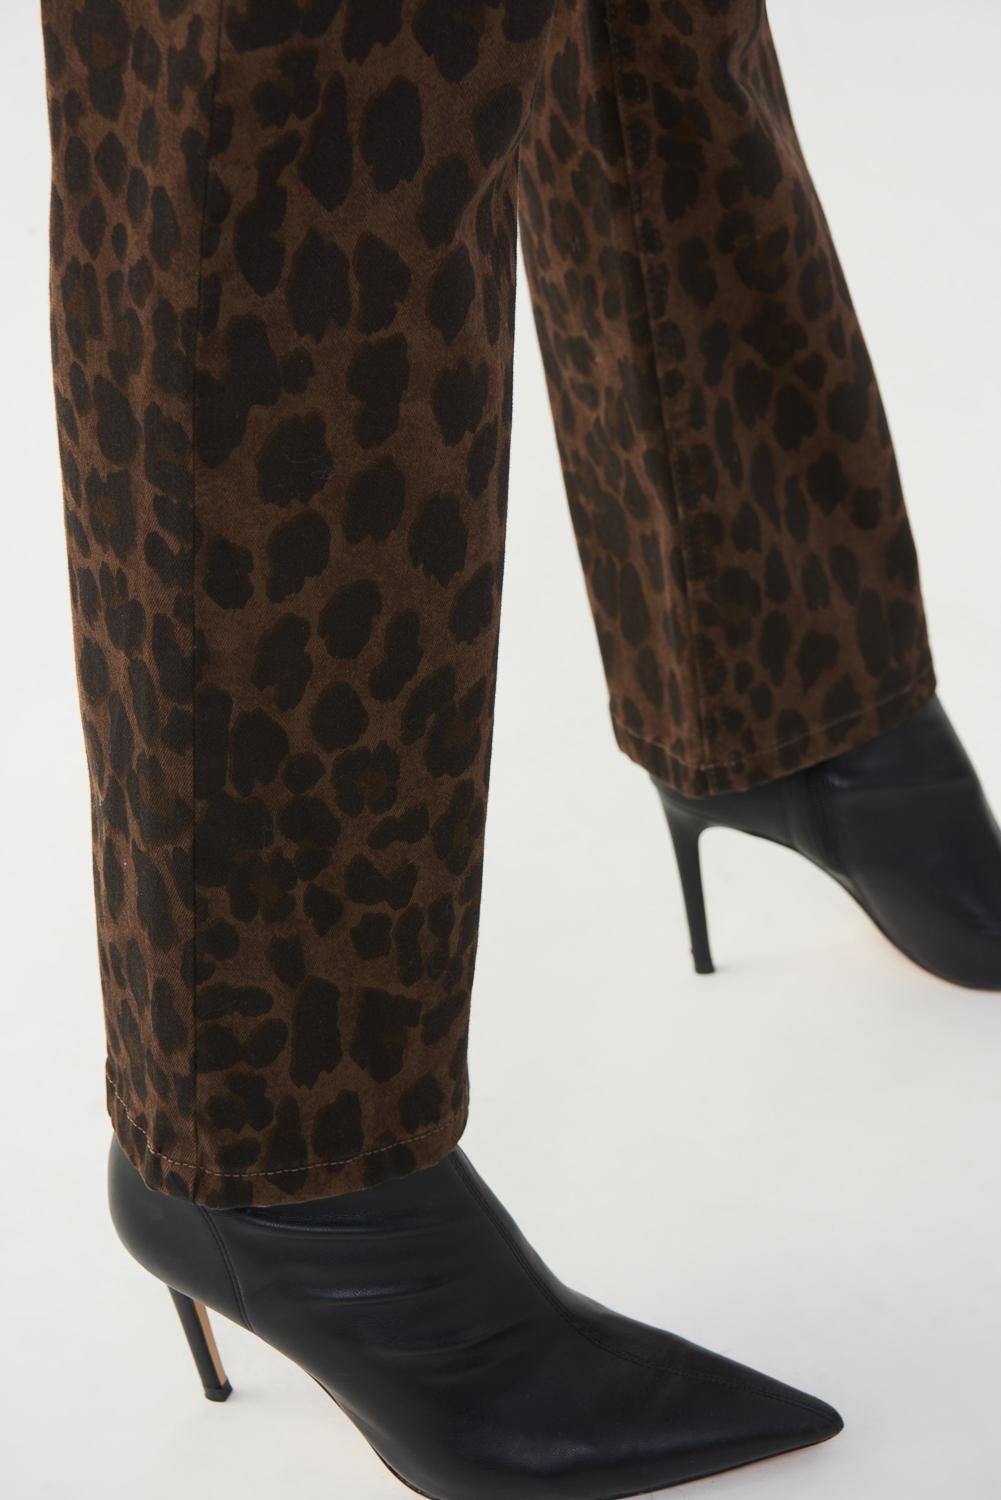 Joseph Ribkoff Leopard Print Jeans Style 223934 